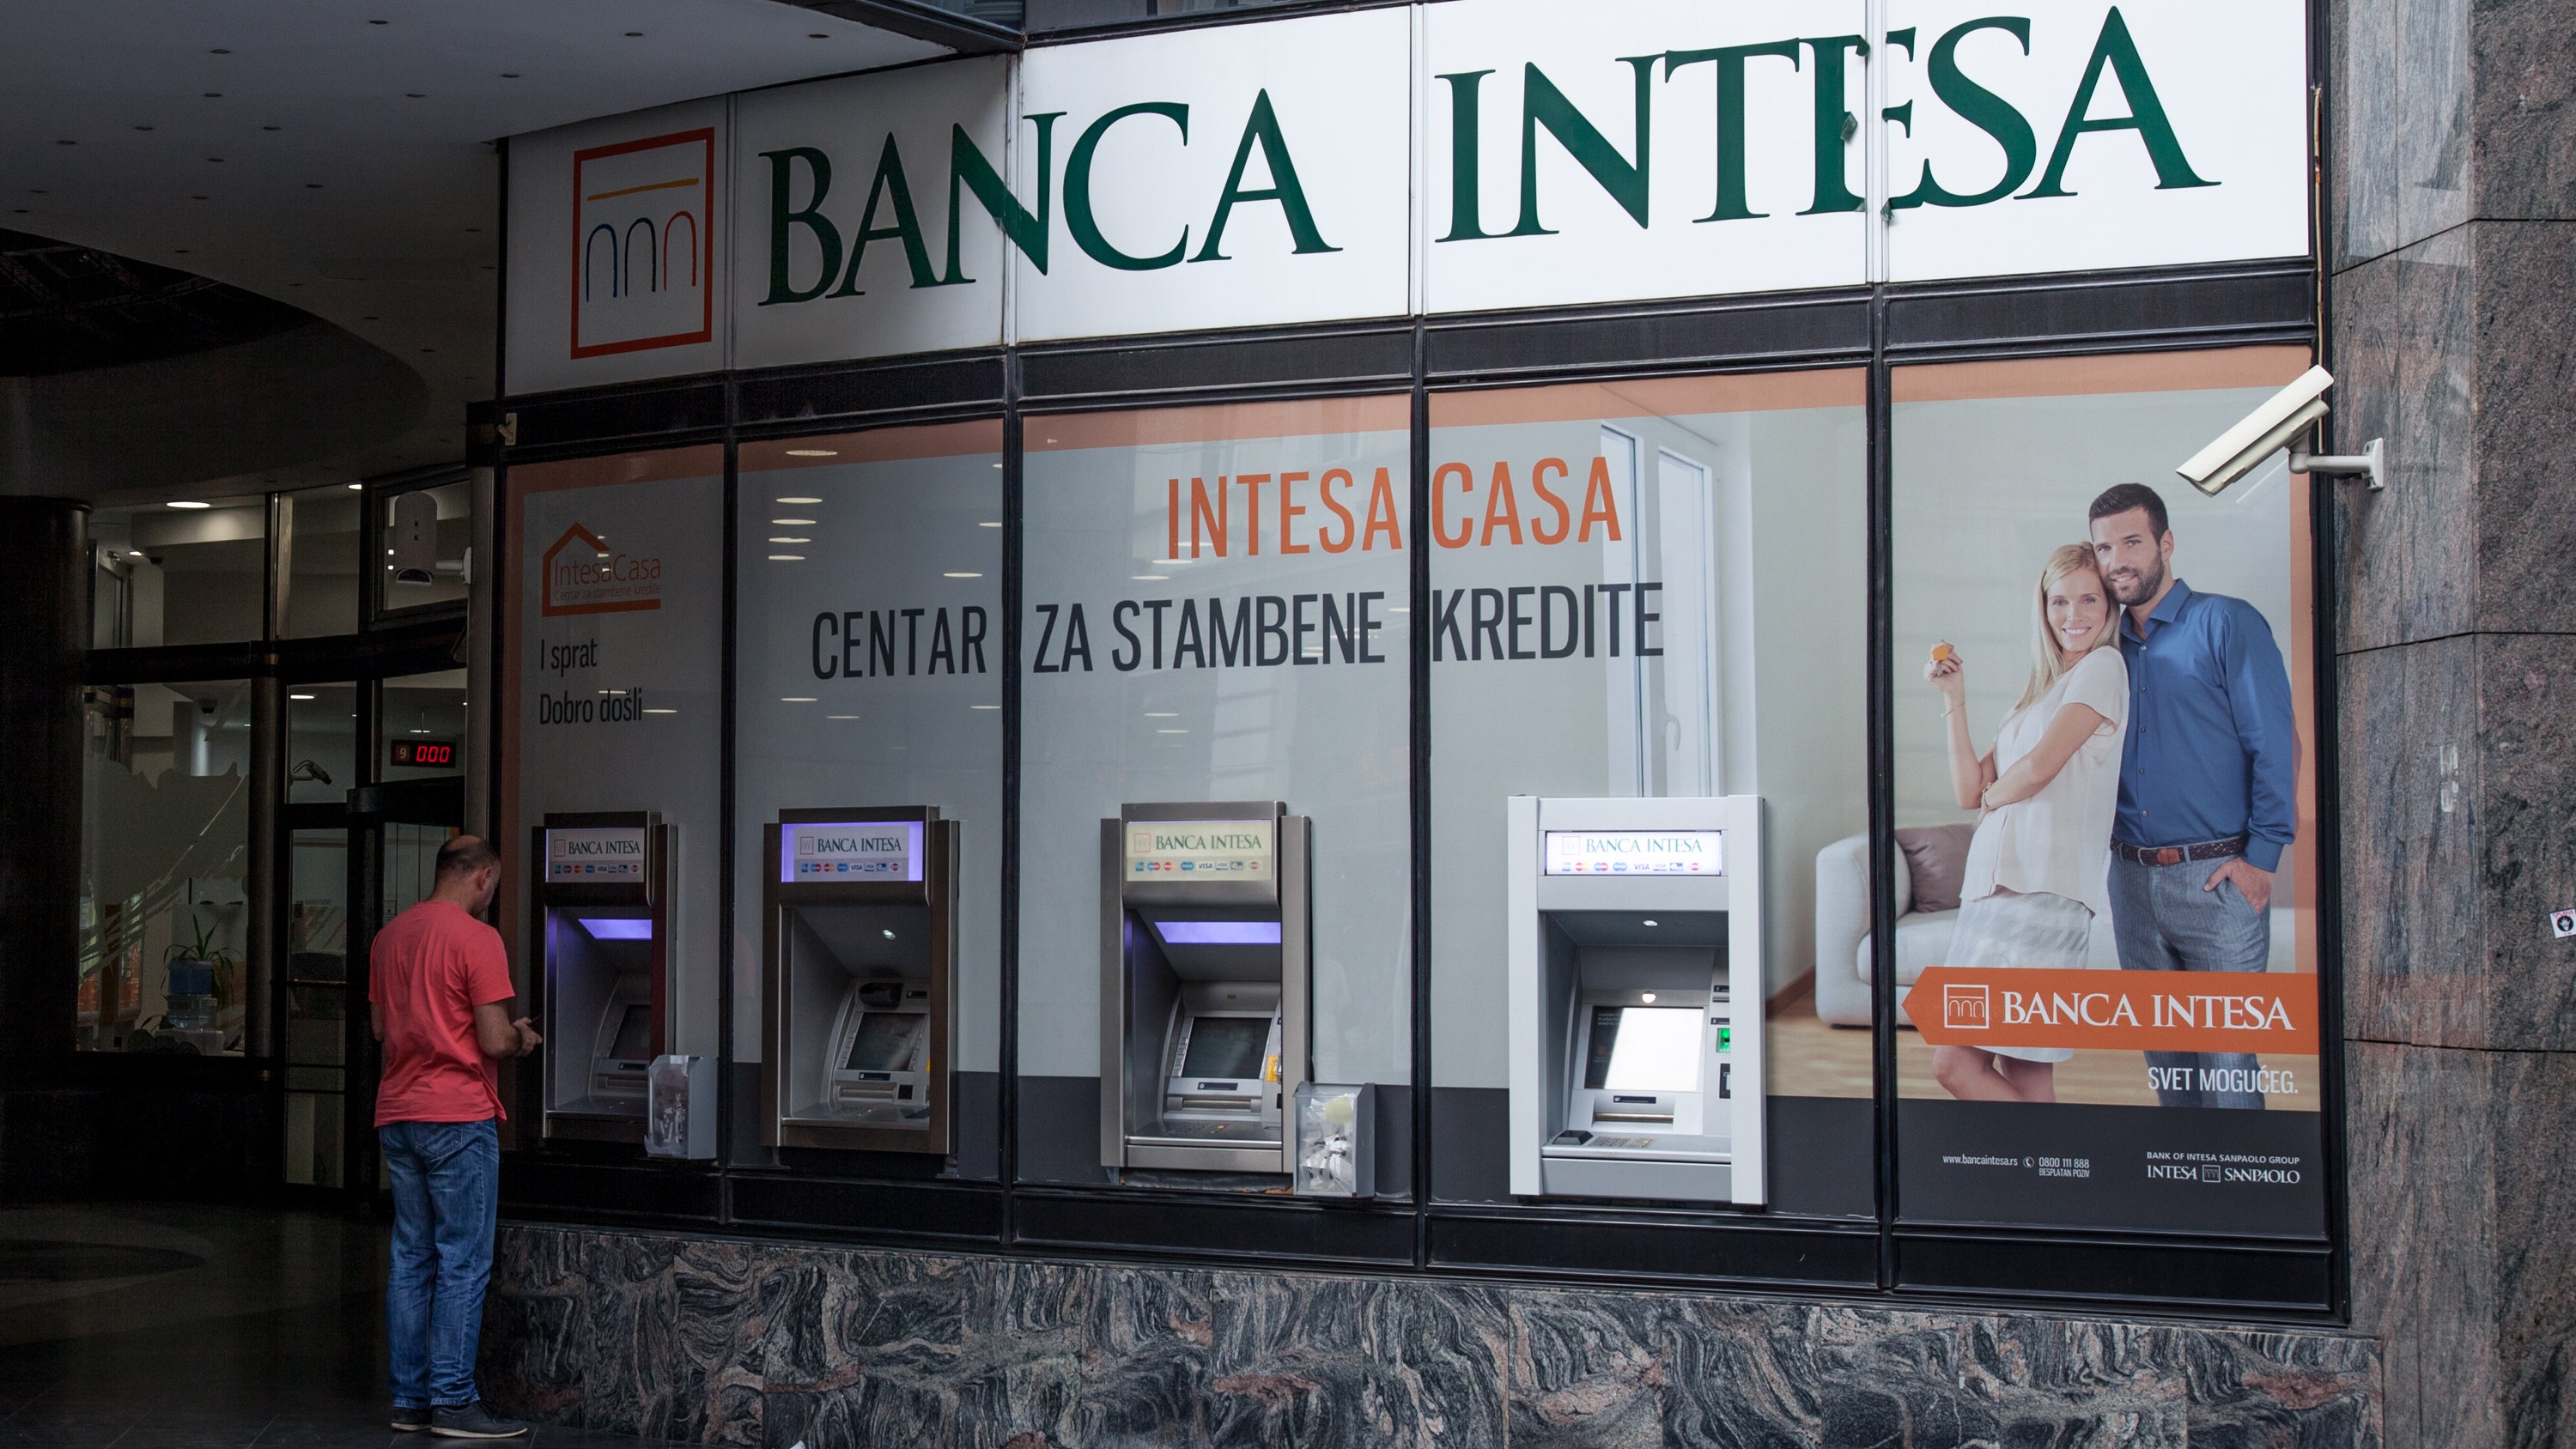 Intesa sanpaolo. Intesa логотип. Интеза Санпаоло. Интеза Санпаоло итальянский банк фото. Банк Интеза лого.